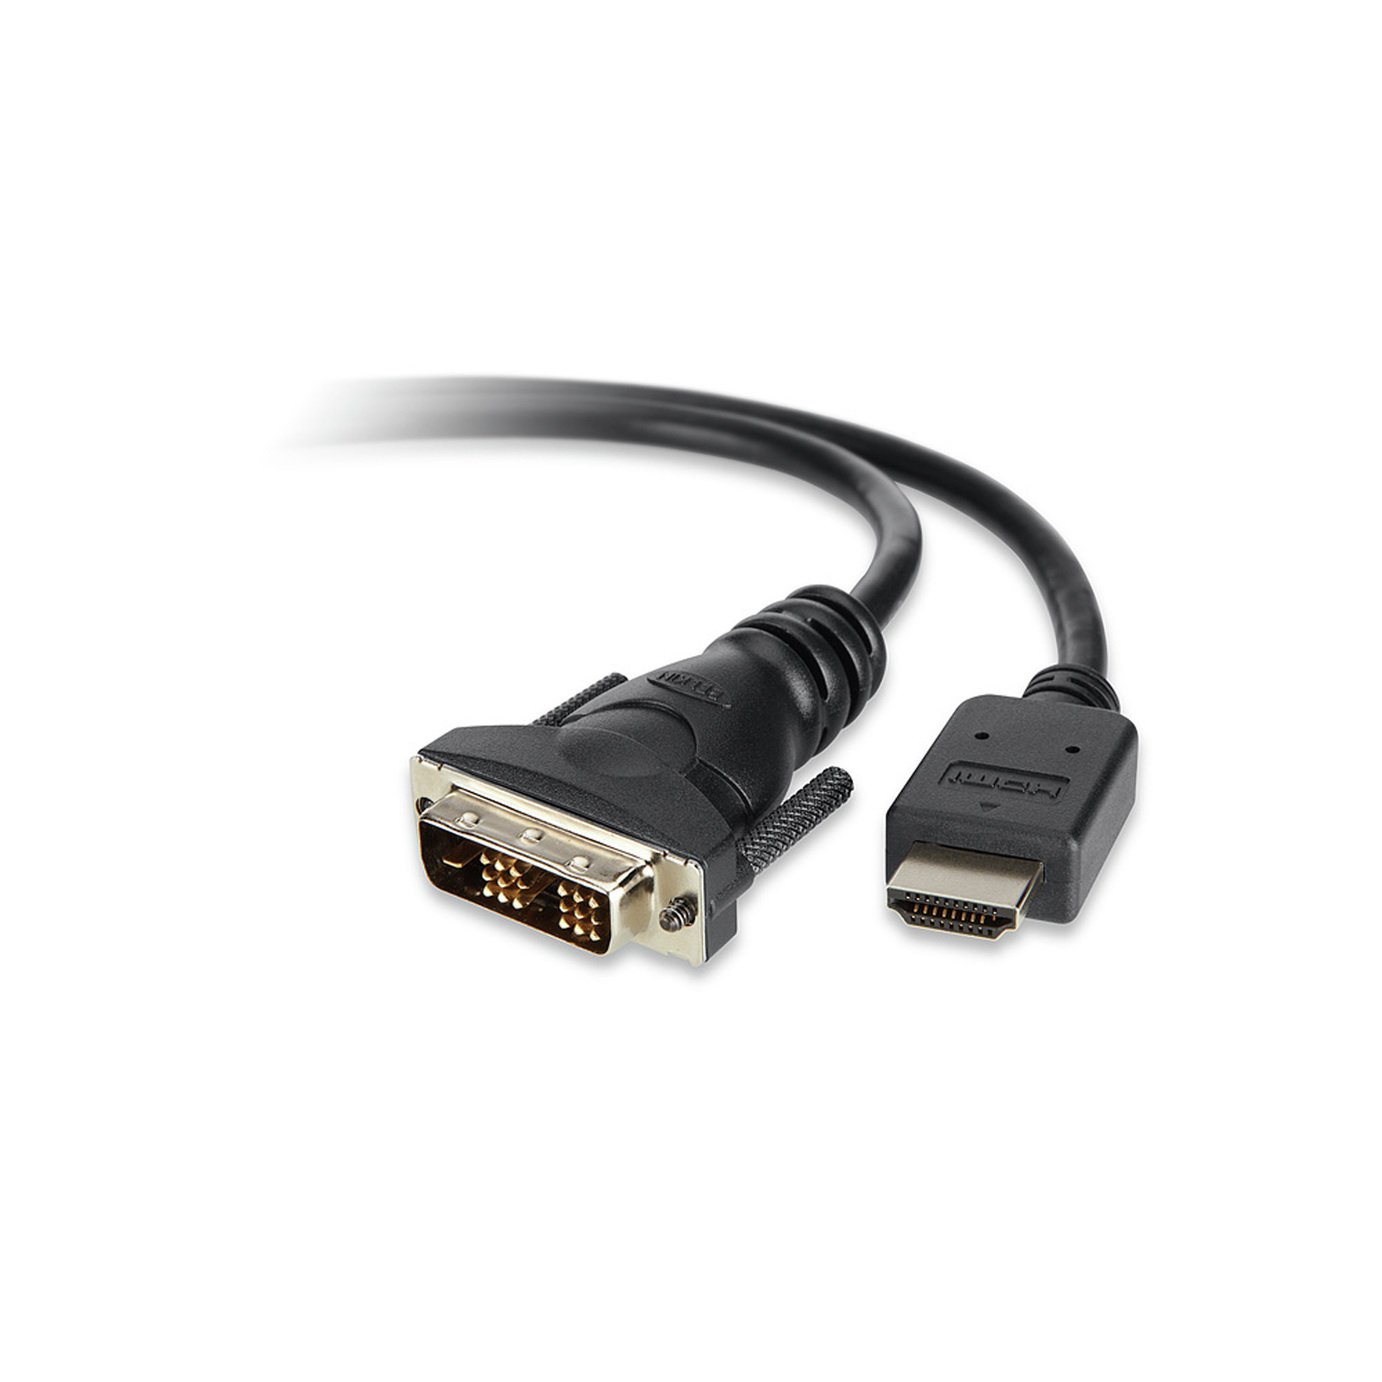 Belkin 1.8m HDMI to DVI Video Cable - Black